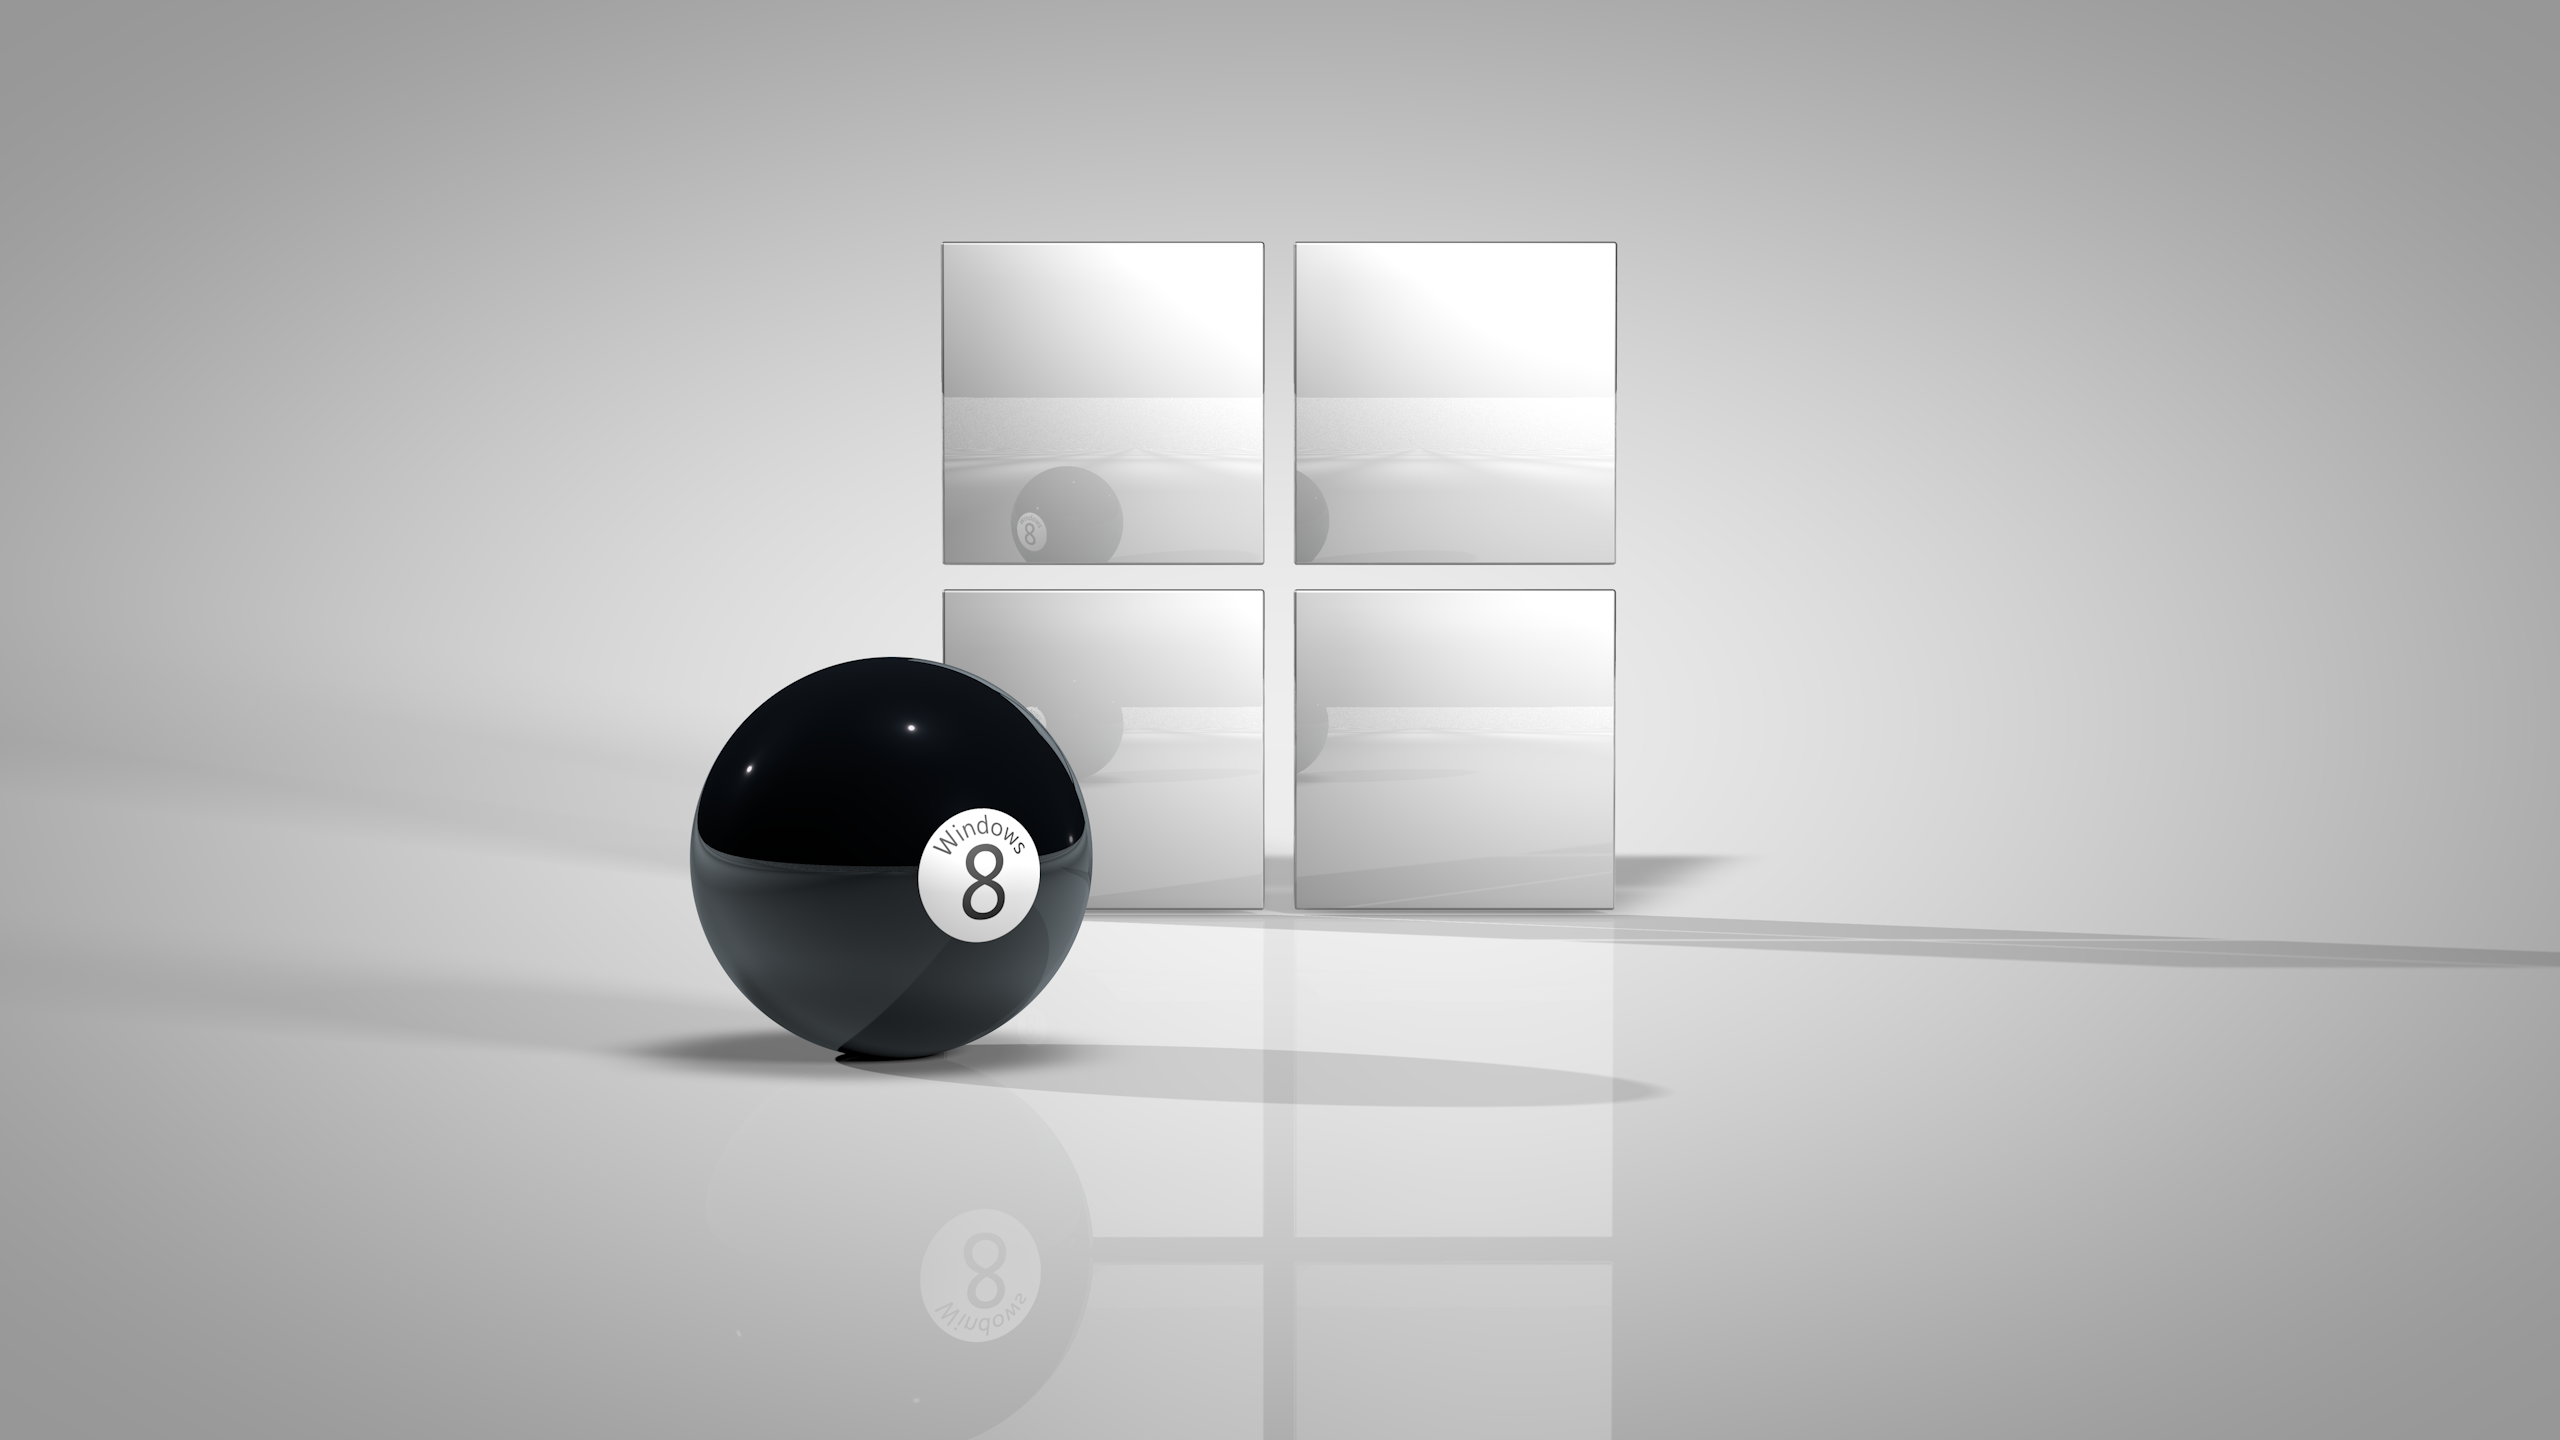 Windows 8 Ball by monkeymagico on DeviantArt